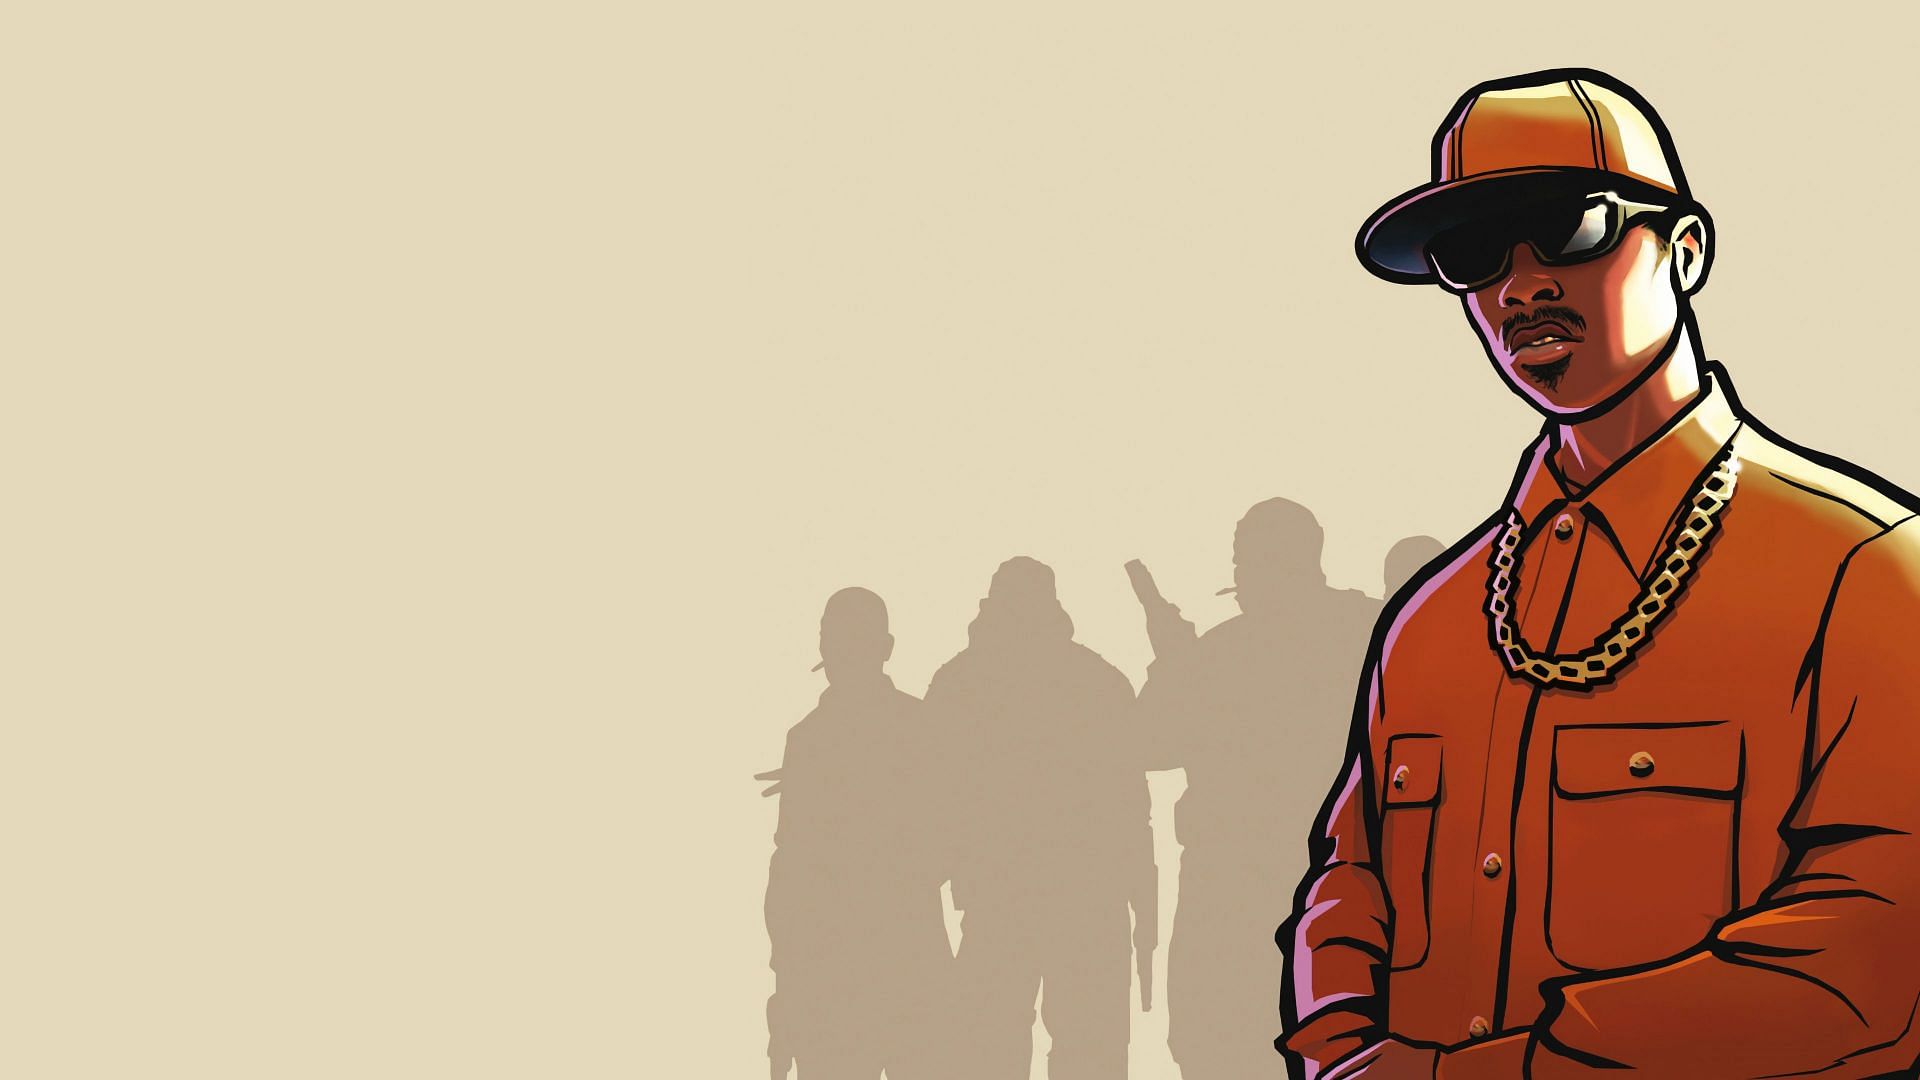 The man in the orange outfit is OG Loc, not CJ (Image via Rockstar Games)